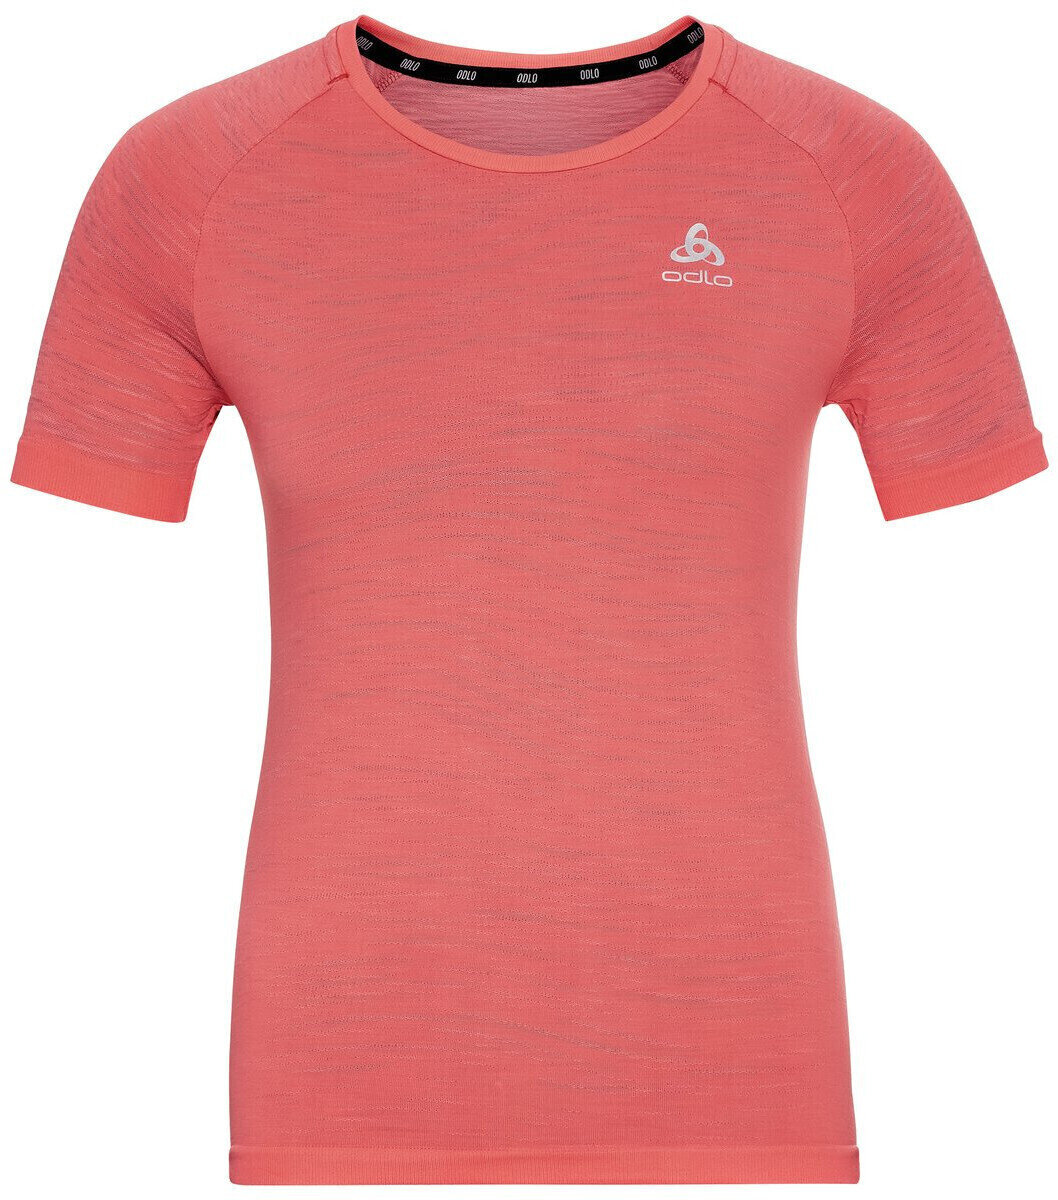 Running t-shirt with short sleeves
 Odlo Blackcomb Ceramicool T-Shirt Siesta/Space Dye M Running t-shirt with short sleeves